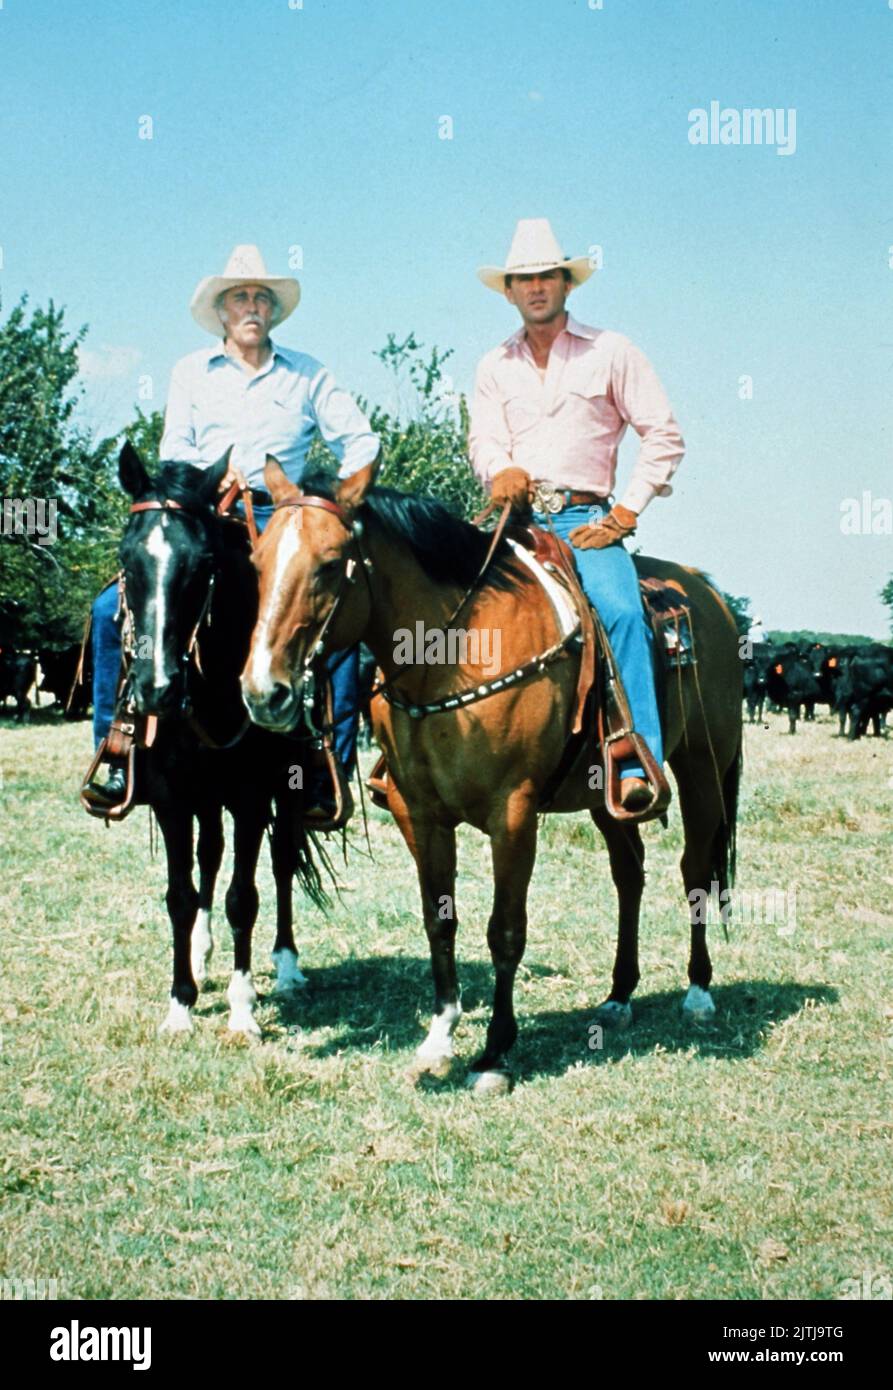 Dallas, Fernsehserie, USA 1978 - 1991, Darsteller: Howard Keel, Patrick Duffy Stock Photo